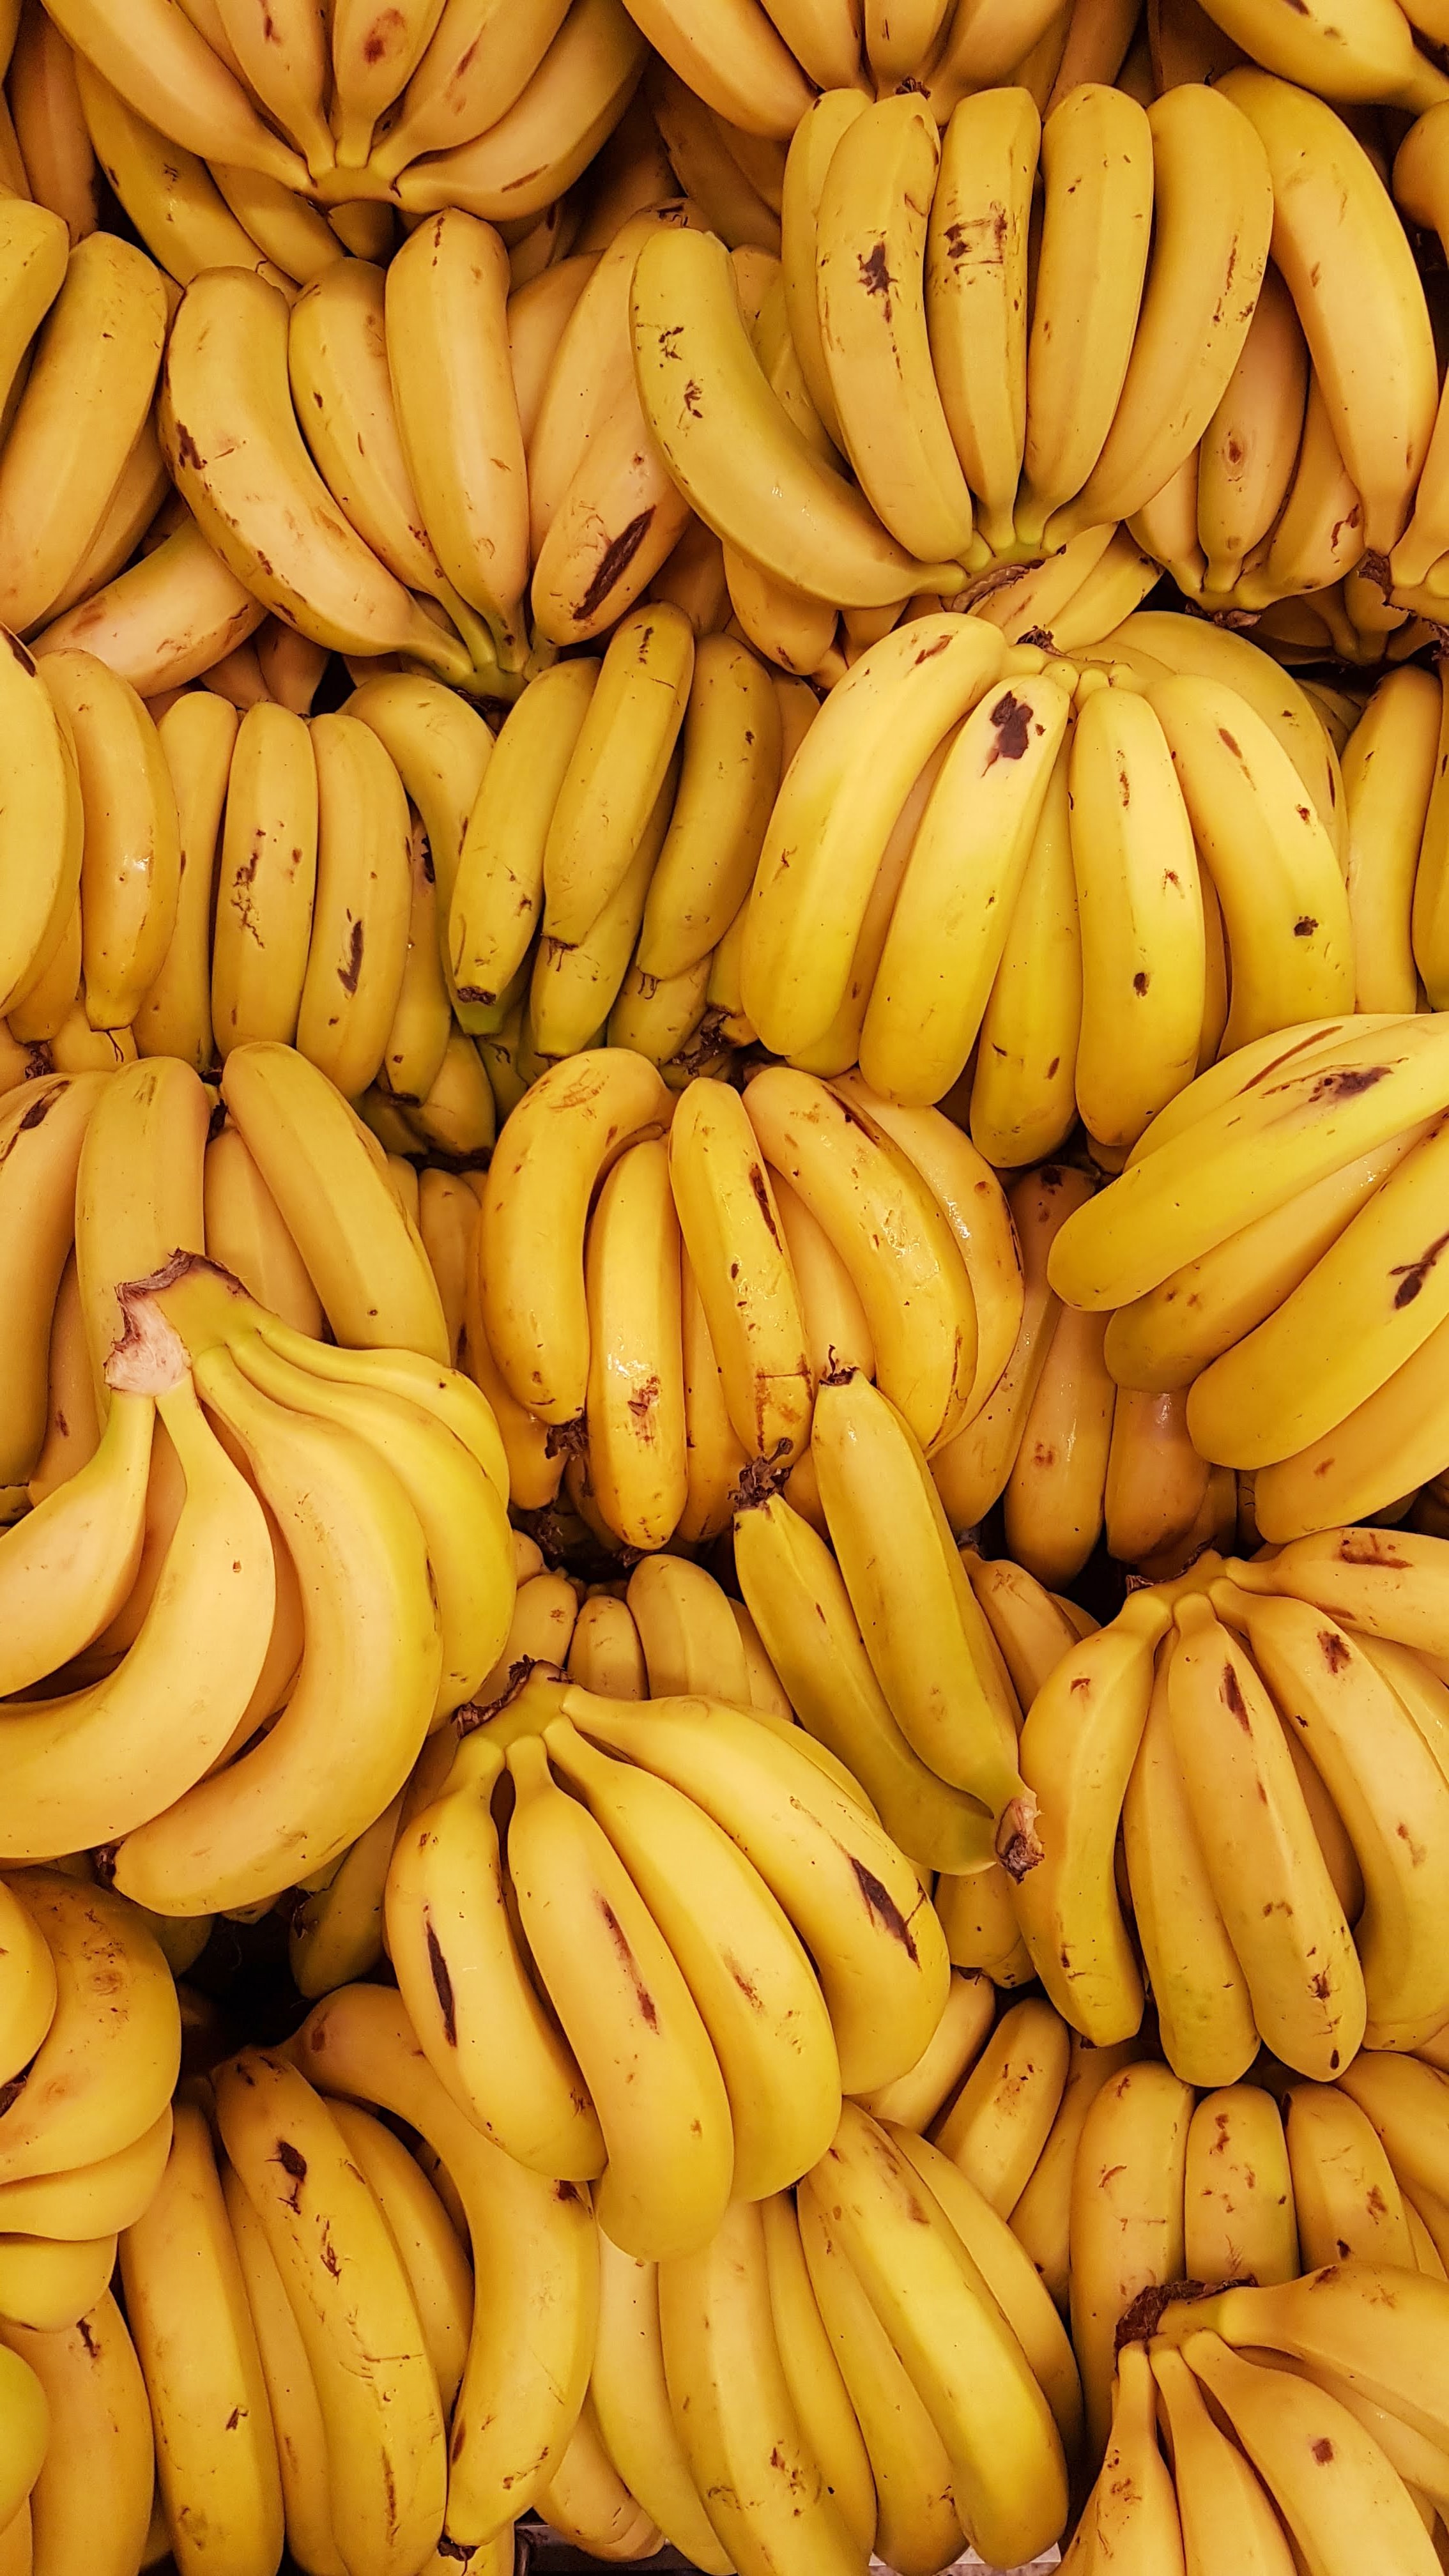 Eat Bananas!: Tips and Tricks